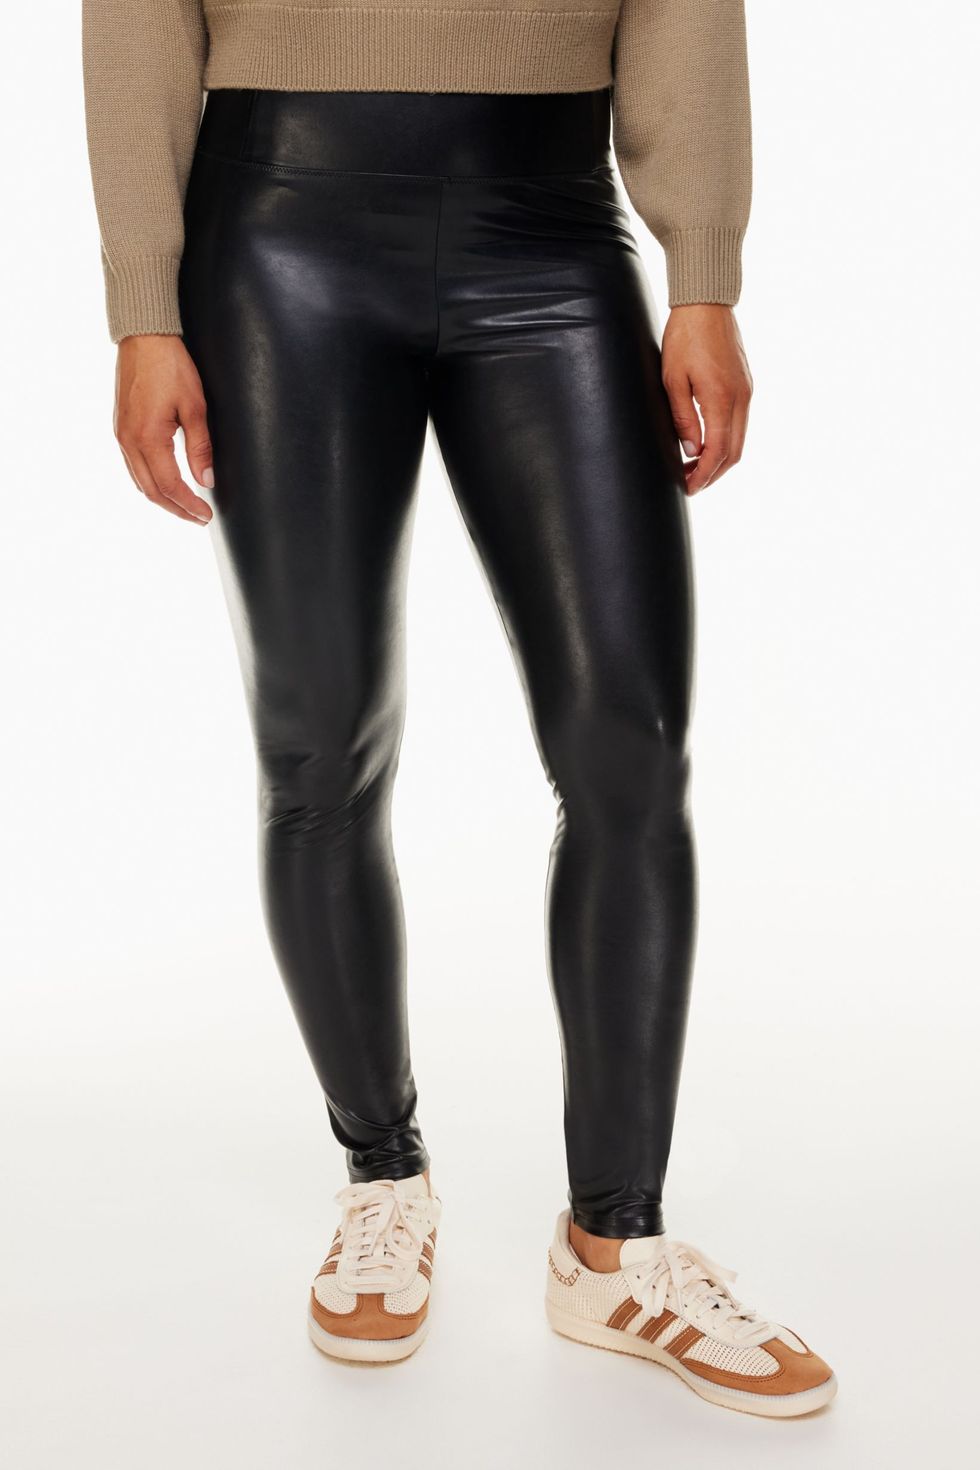 High quality latex pants rubber leggings for women in metallic